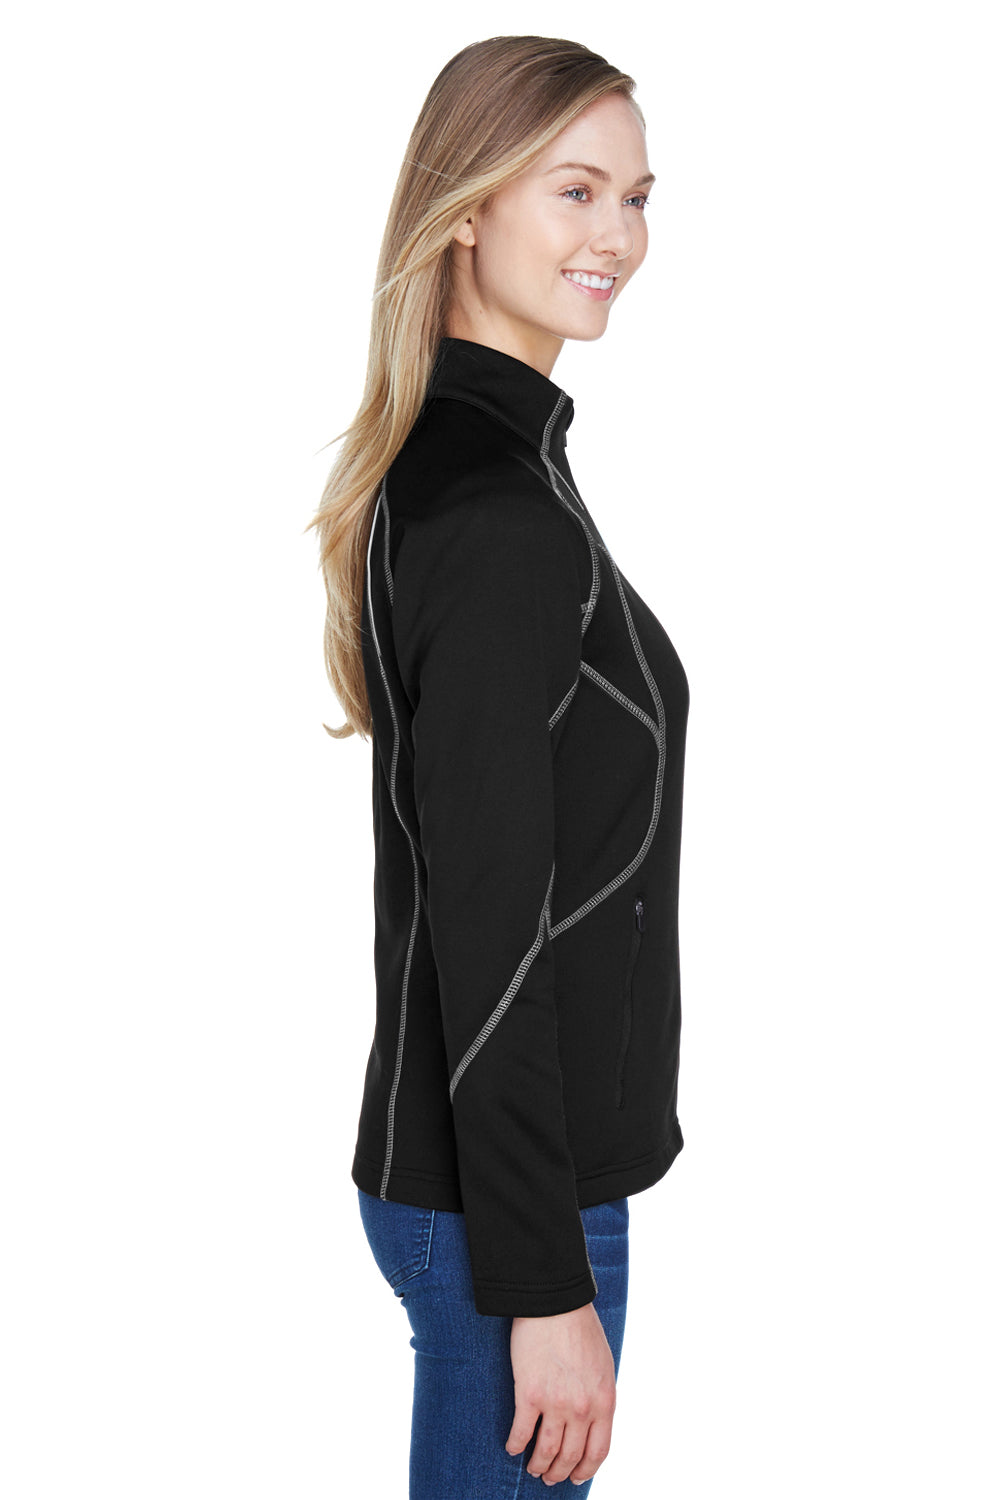 North End 78174 Womens Gravity Performance Moisture Wicking Full Zip Fleece Jacket Black Side